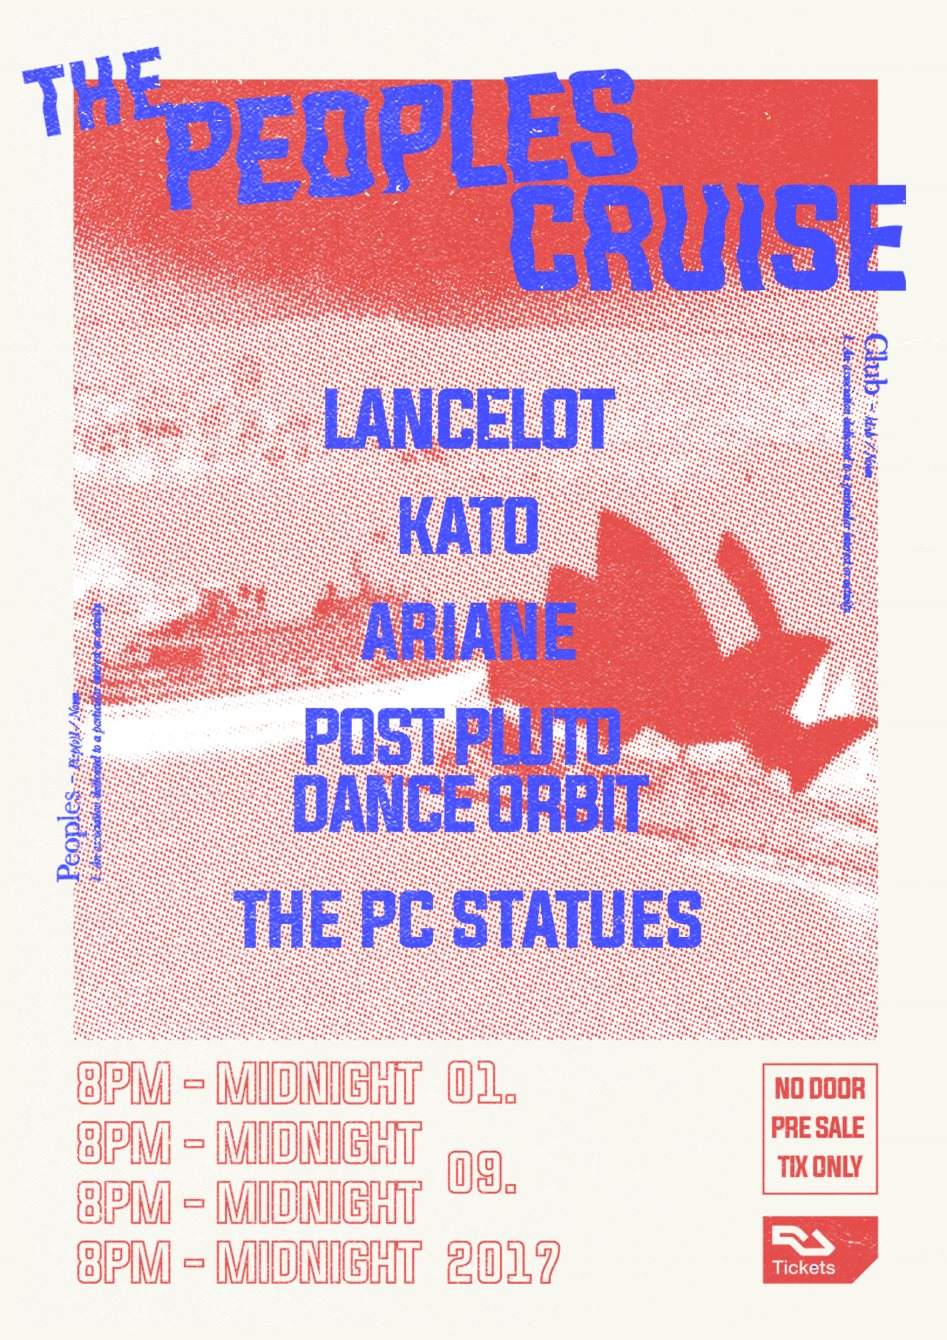 The Peoples Cruise - Lancelot, Kato - フライヤー表